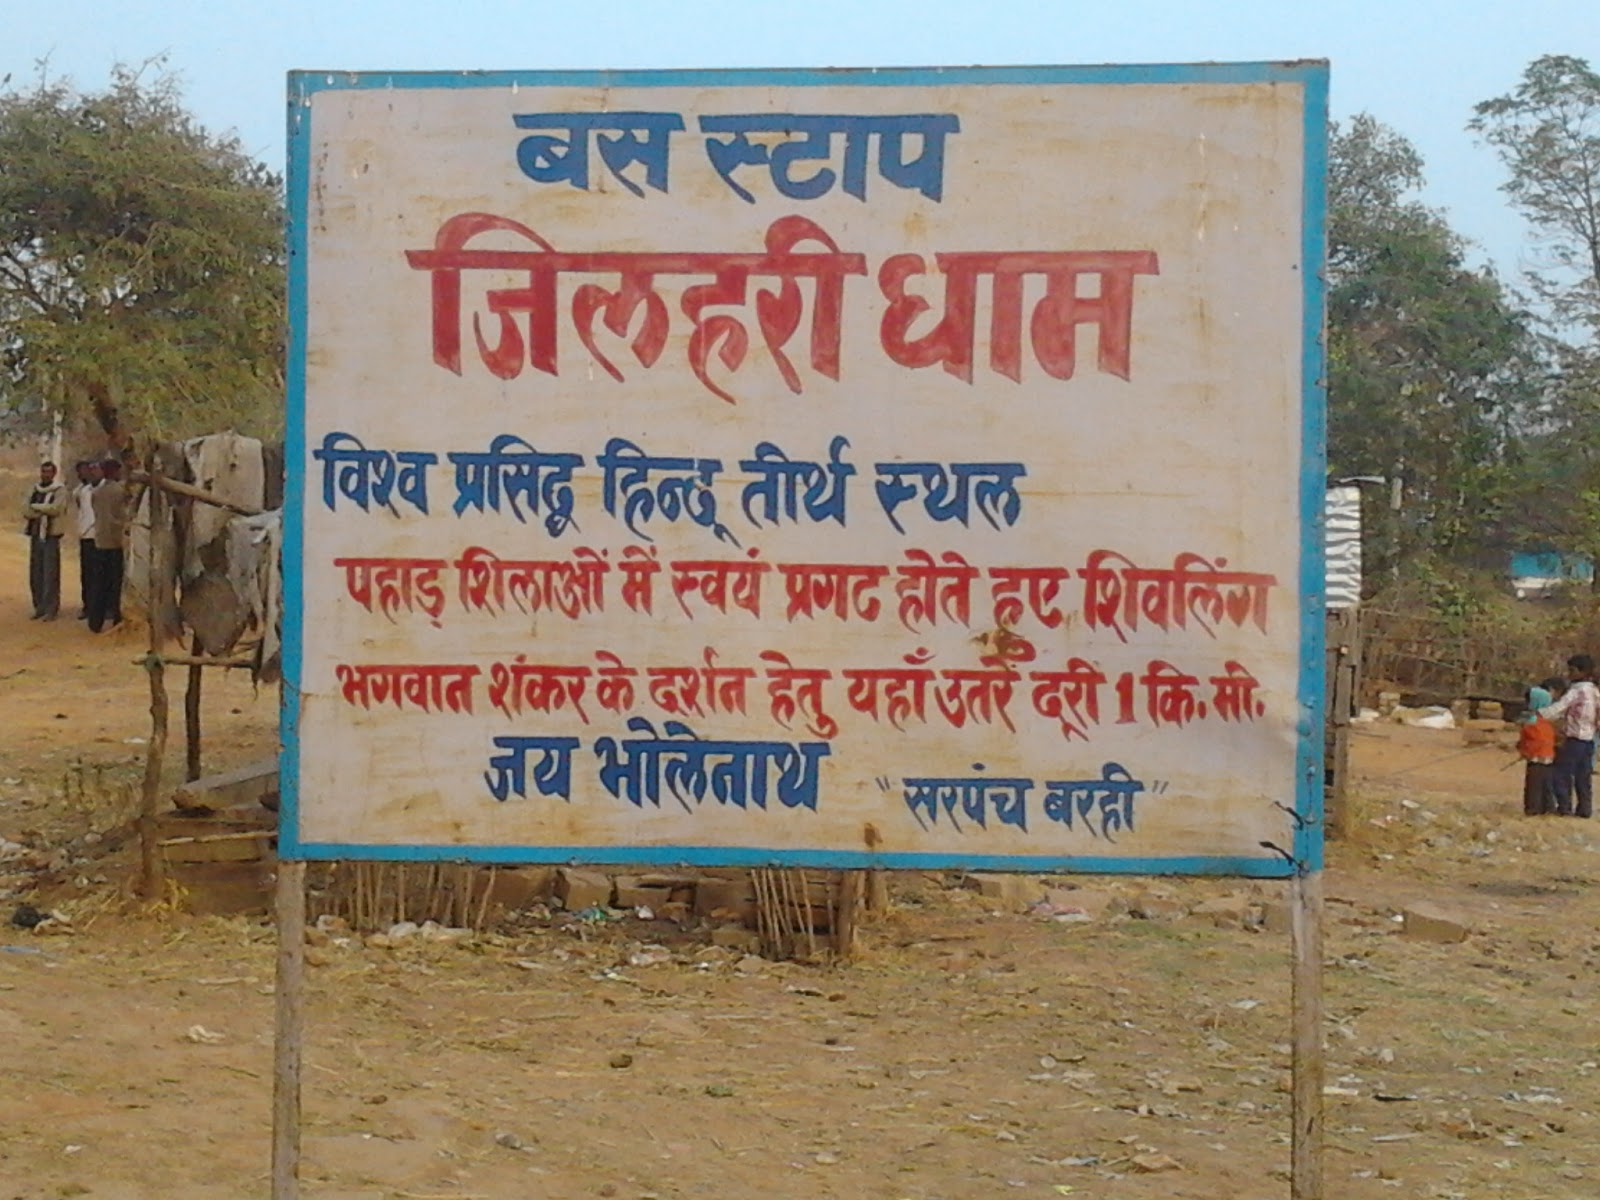 REFORM INDIA: Jellahary, Barhi, District Katni, MP